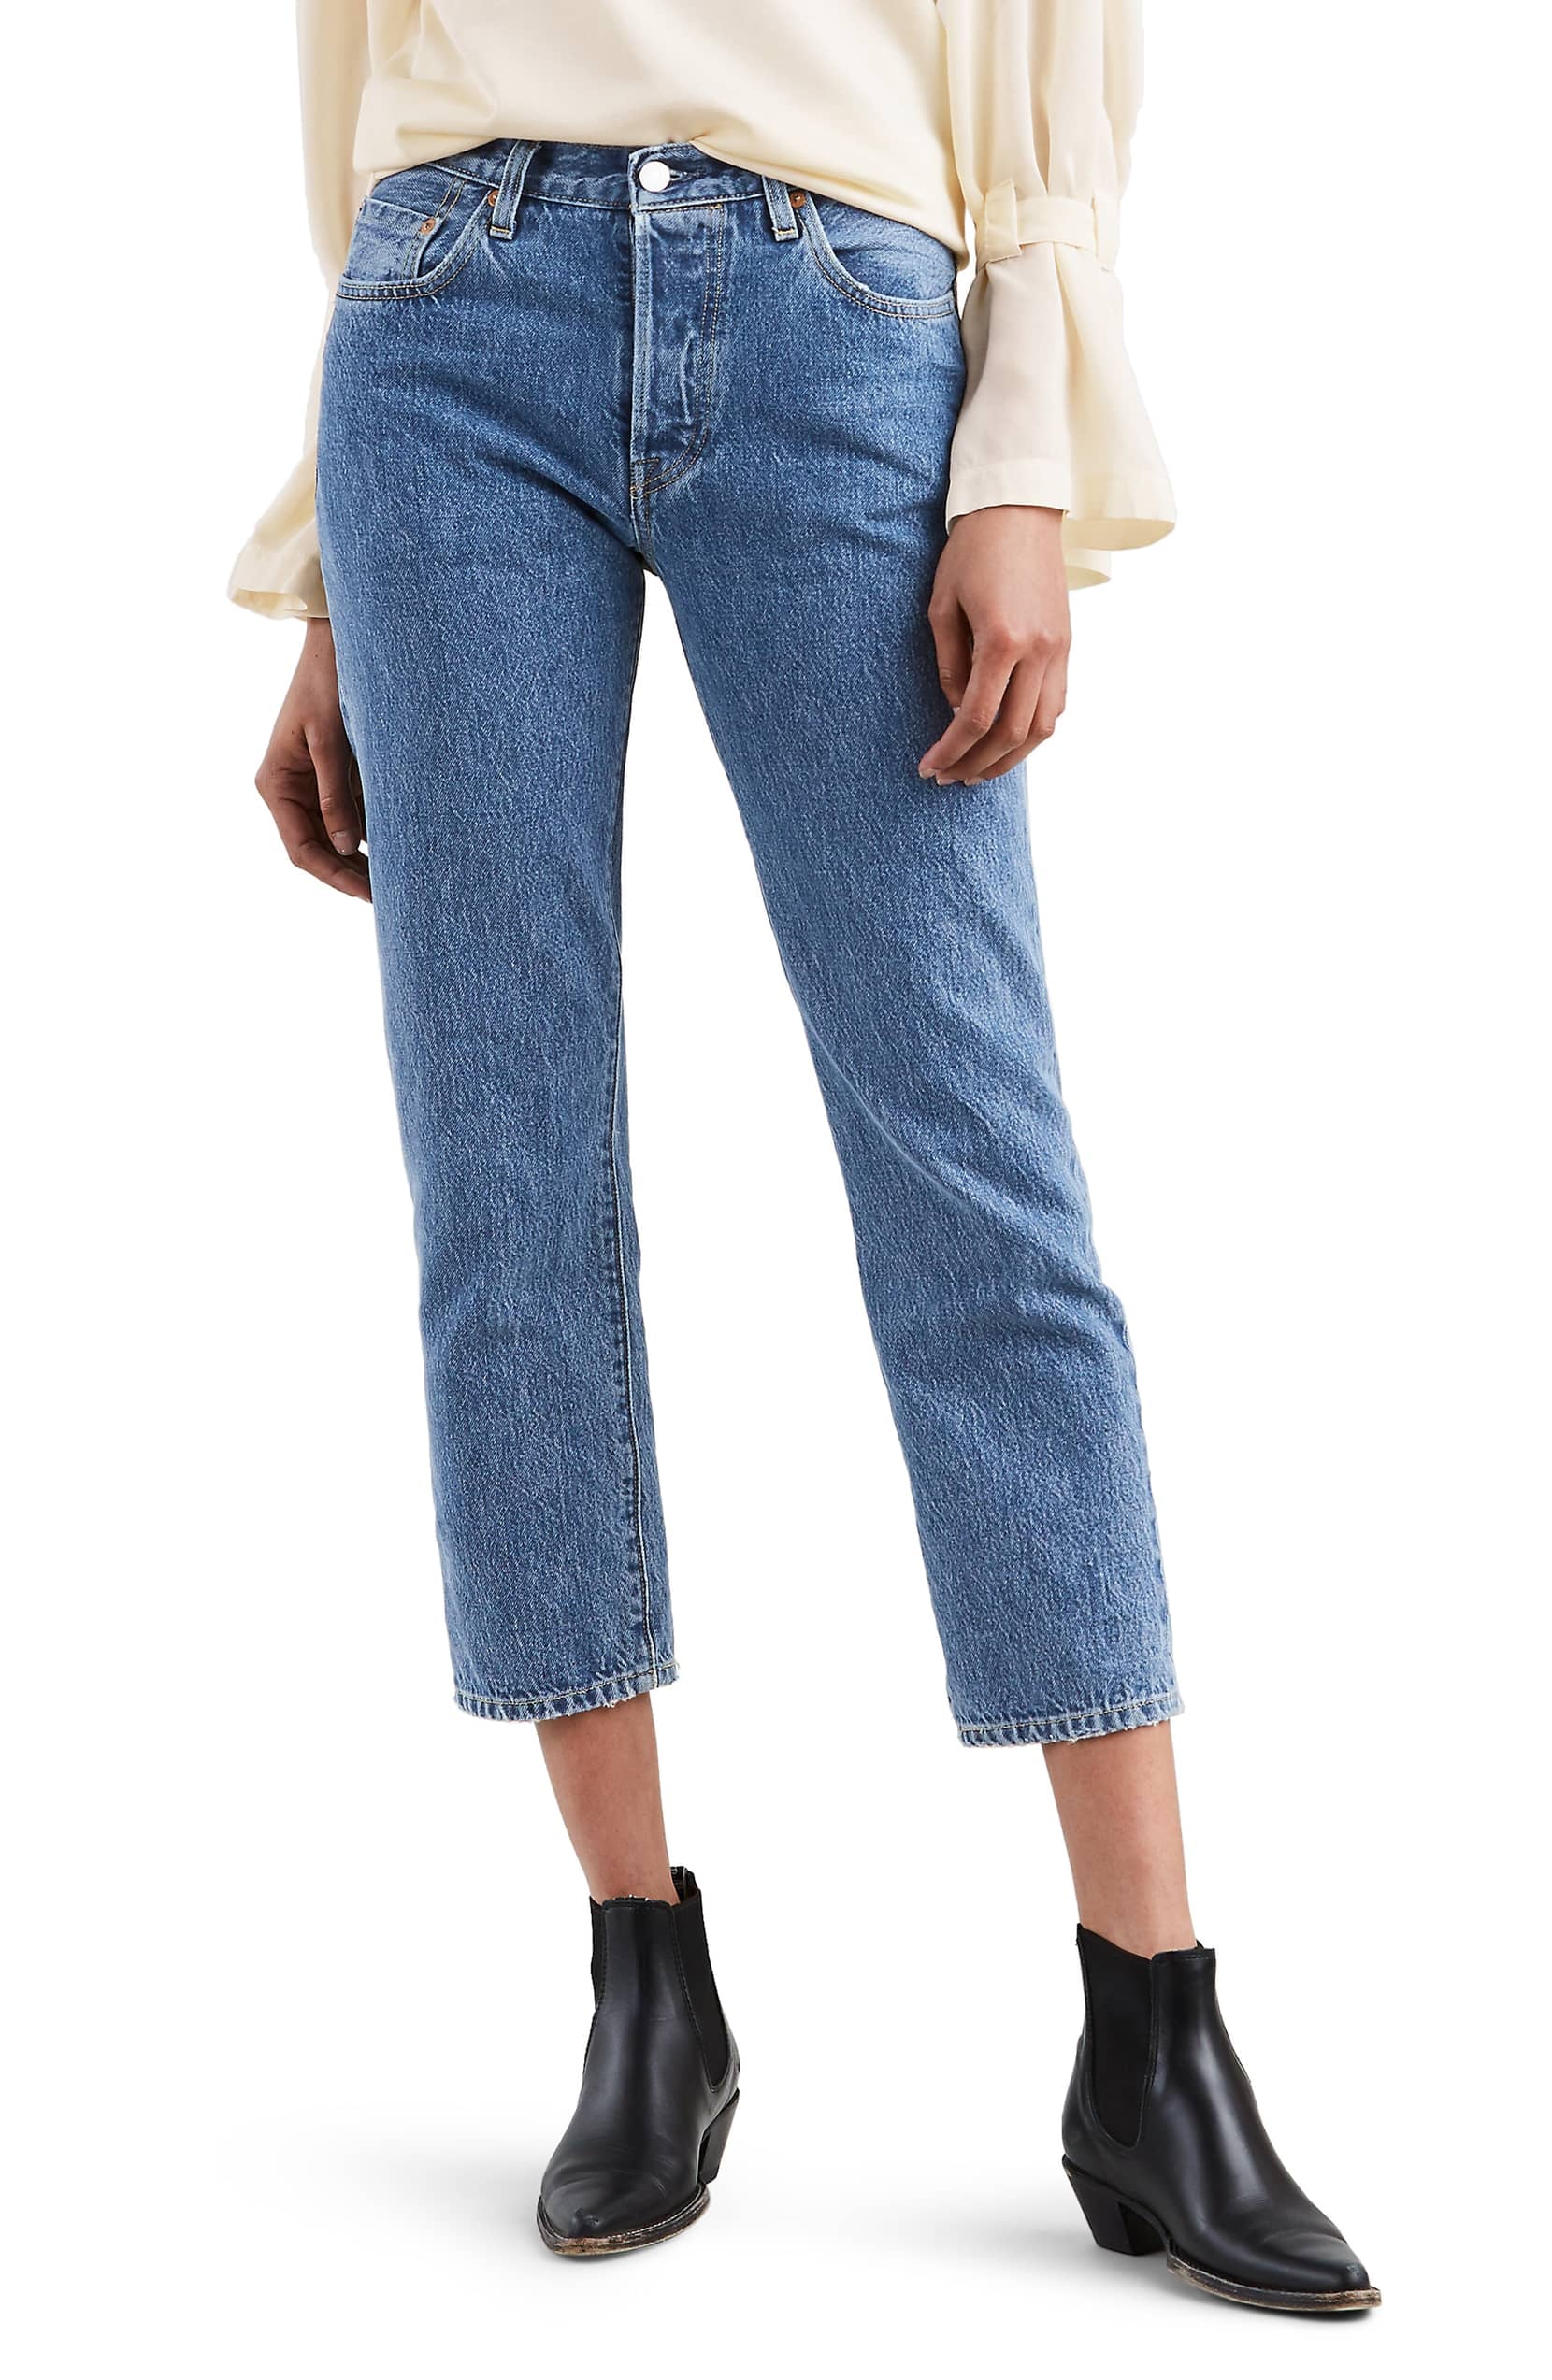 best jeans for petite women